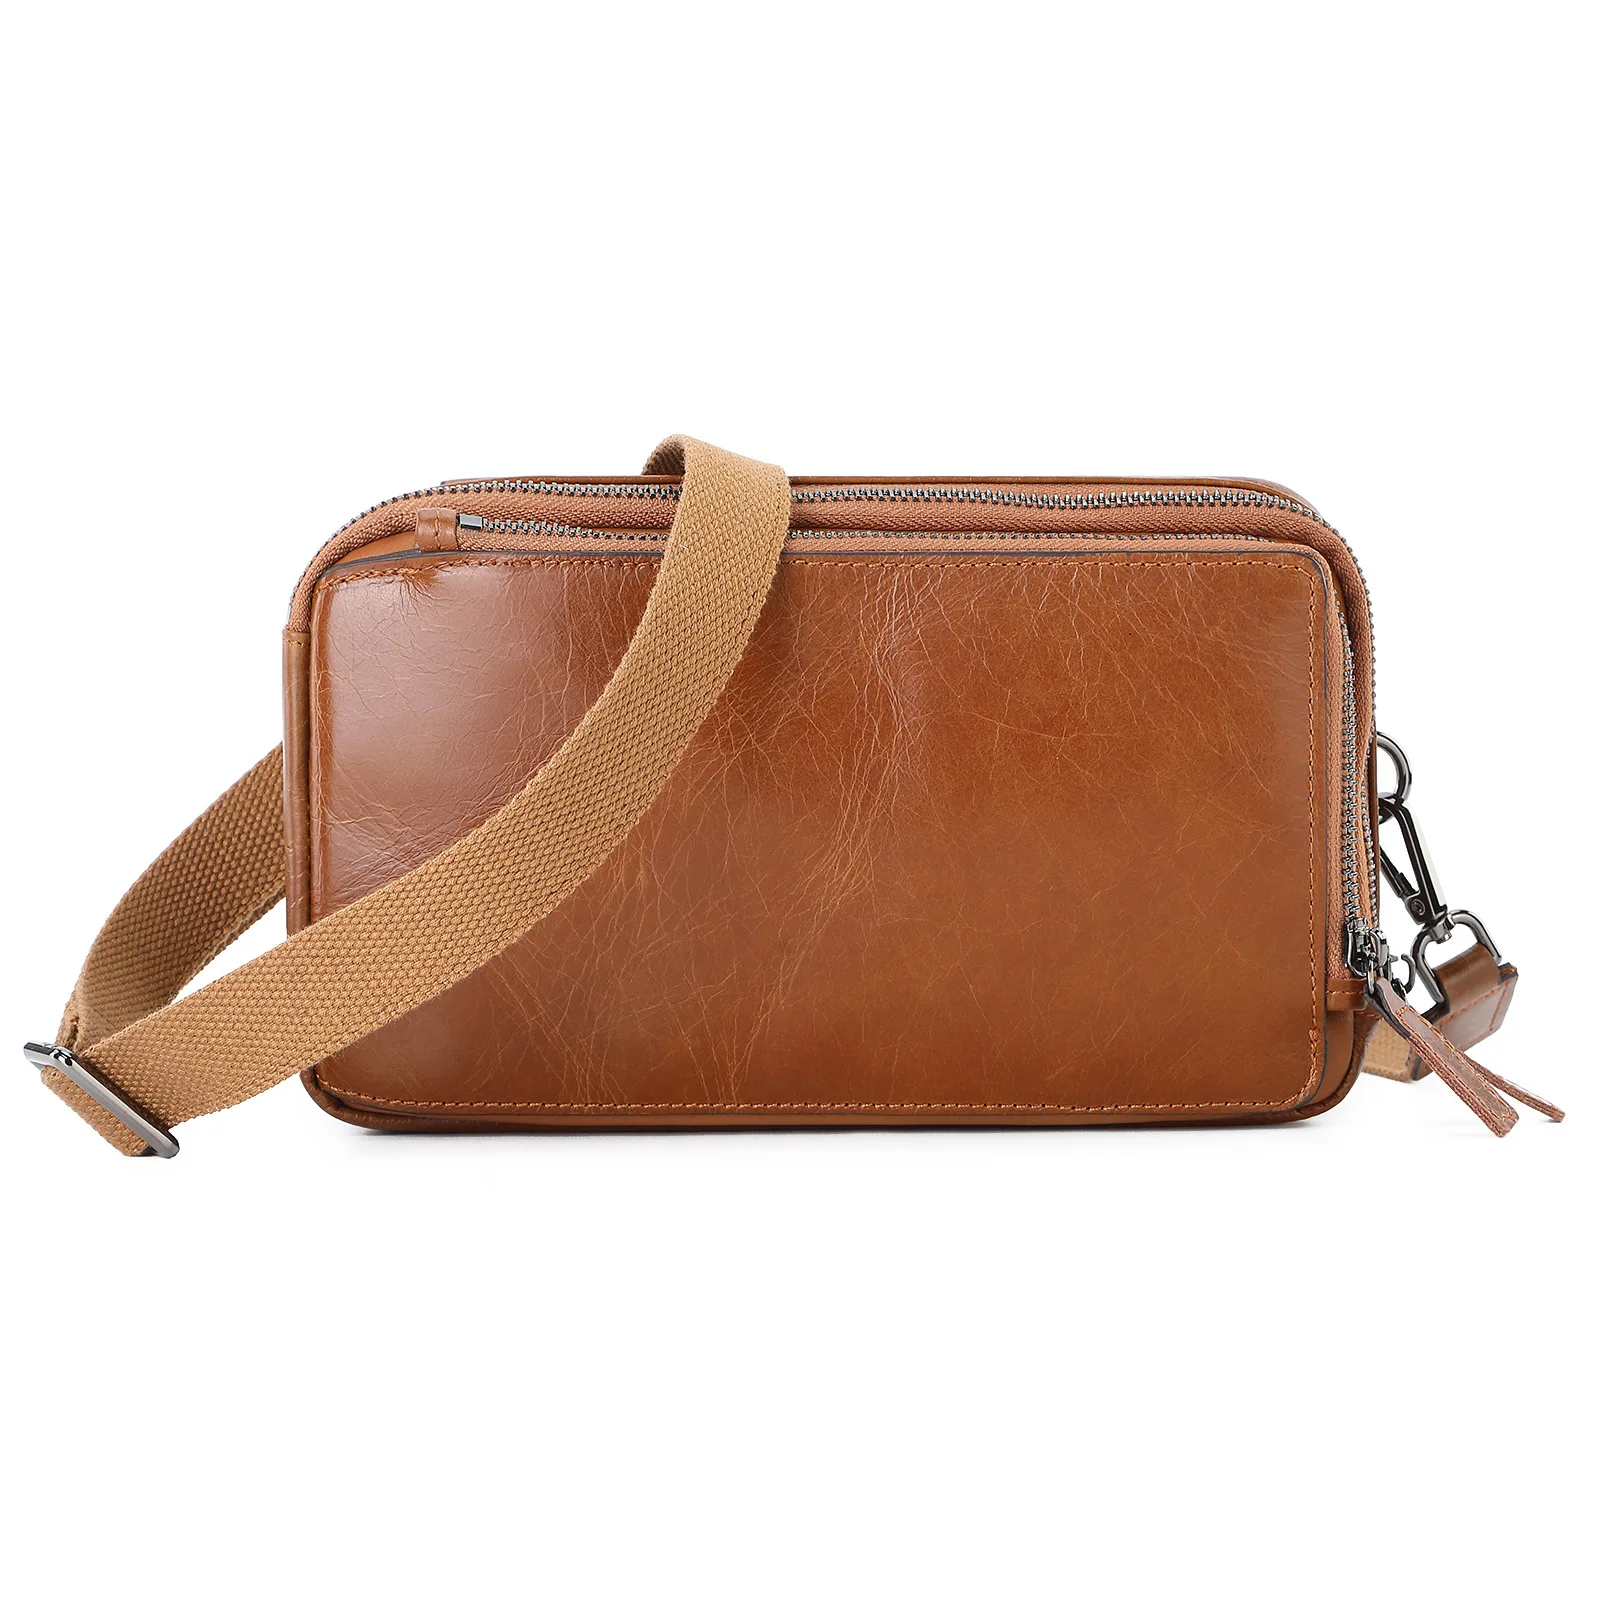 N leather shoulder chest bag men s oil wax cow leather messenger bag office handbag for thumb200